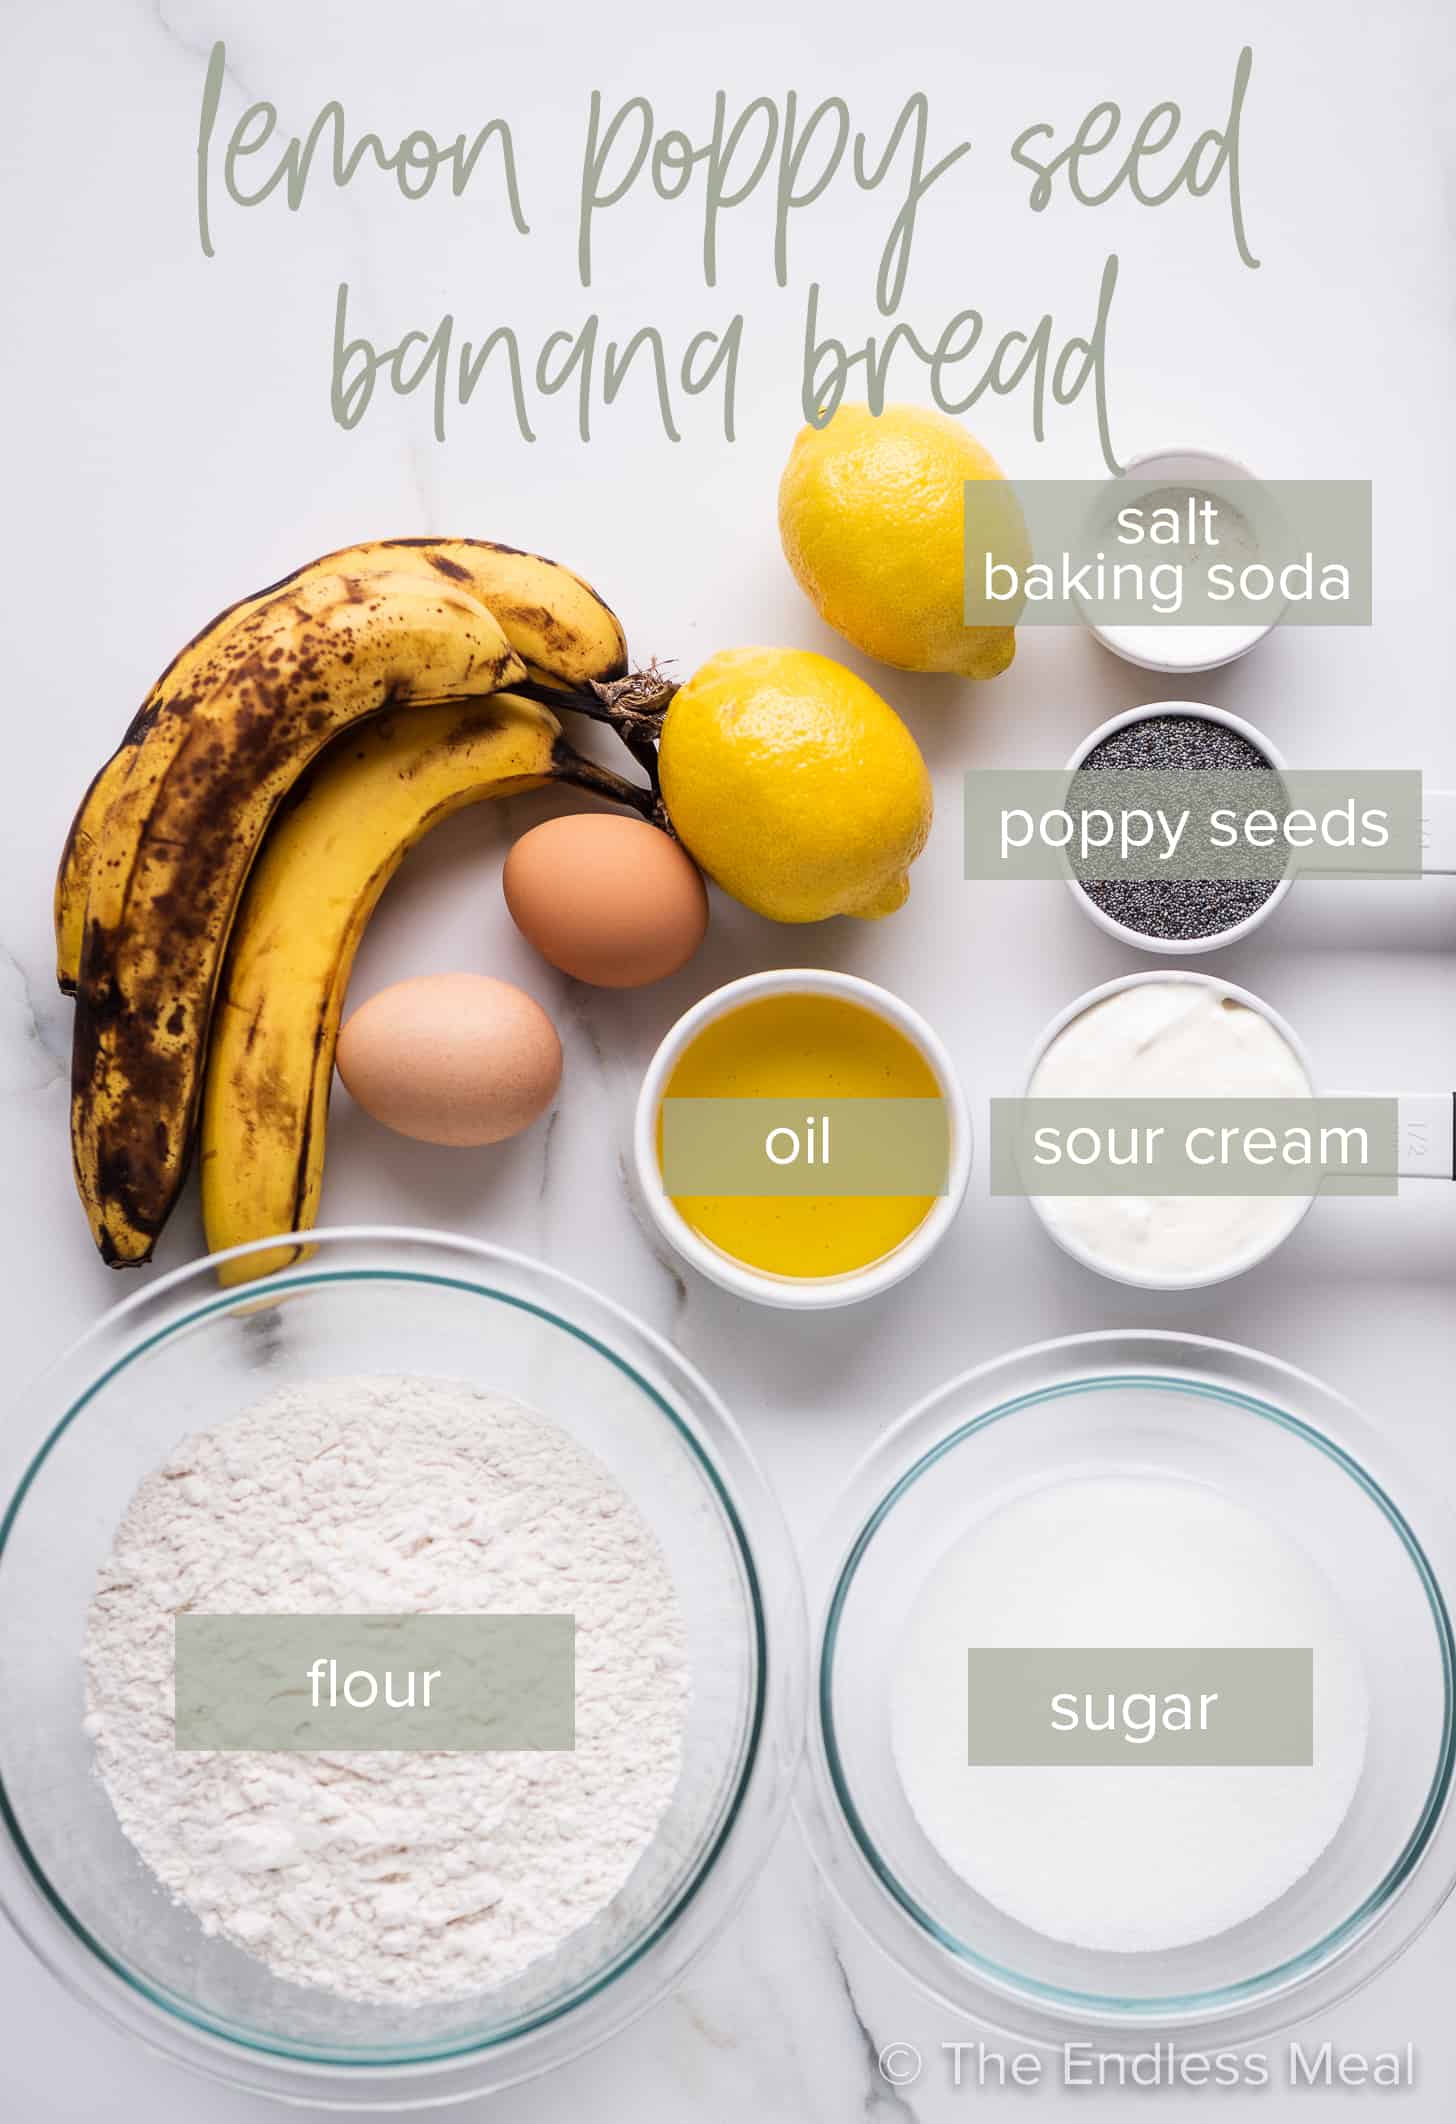 the ingredients needed to make Poppy Seed Lemon Banana Bread